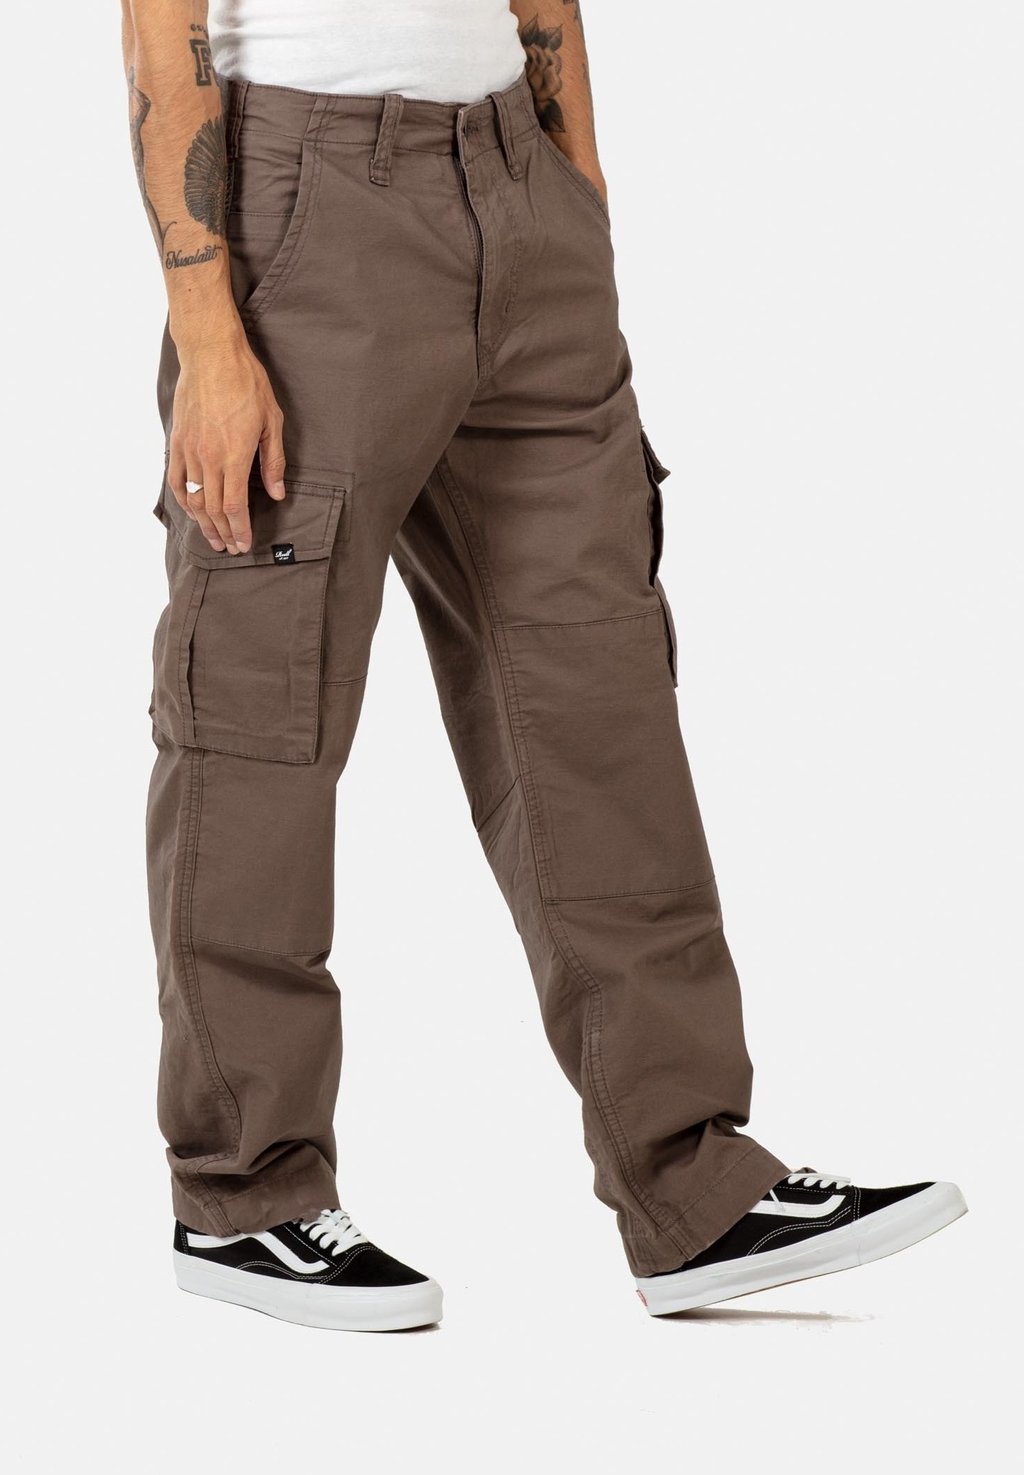 Брюки-карго FLEX LC Reell, цвет grey brown брюки solid reell цвет brown cord